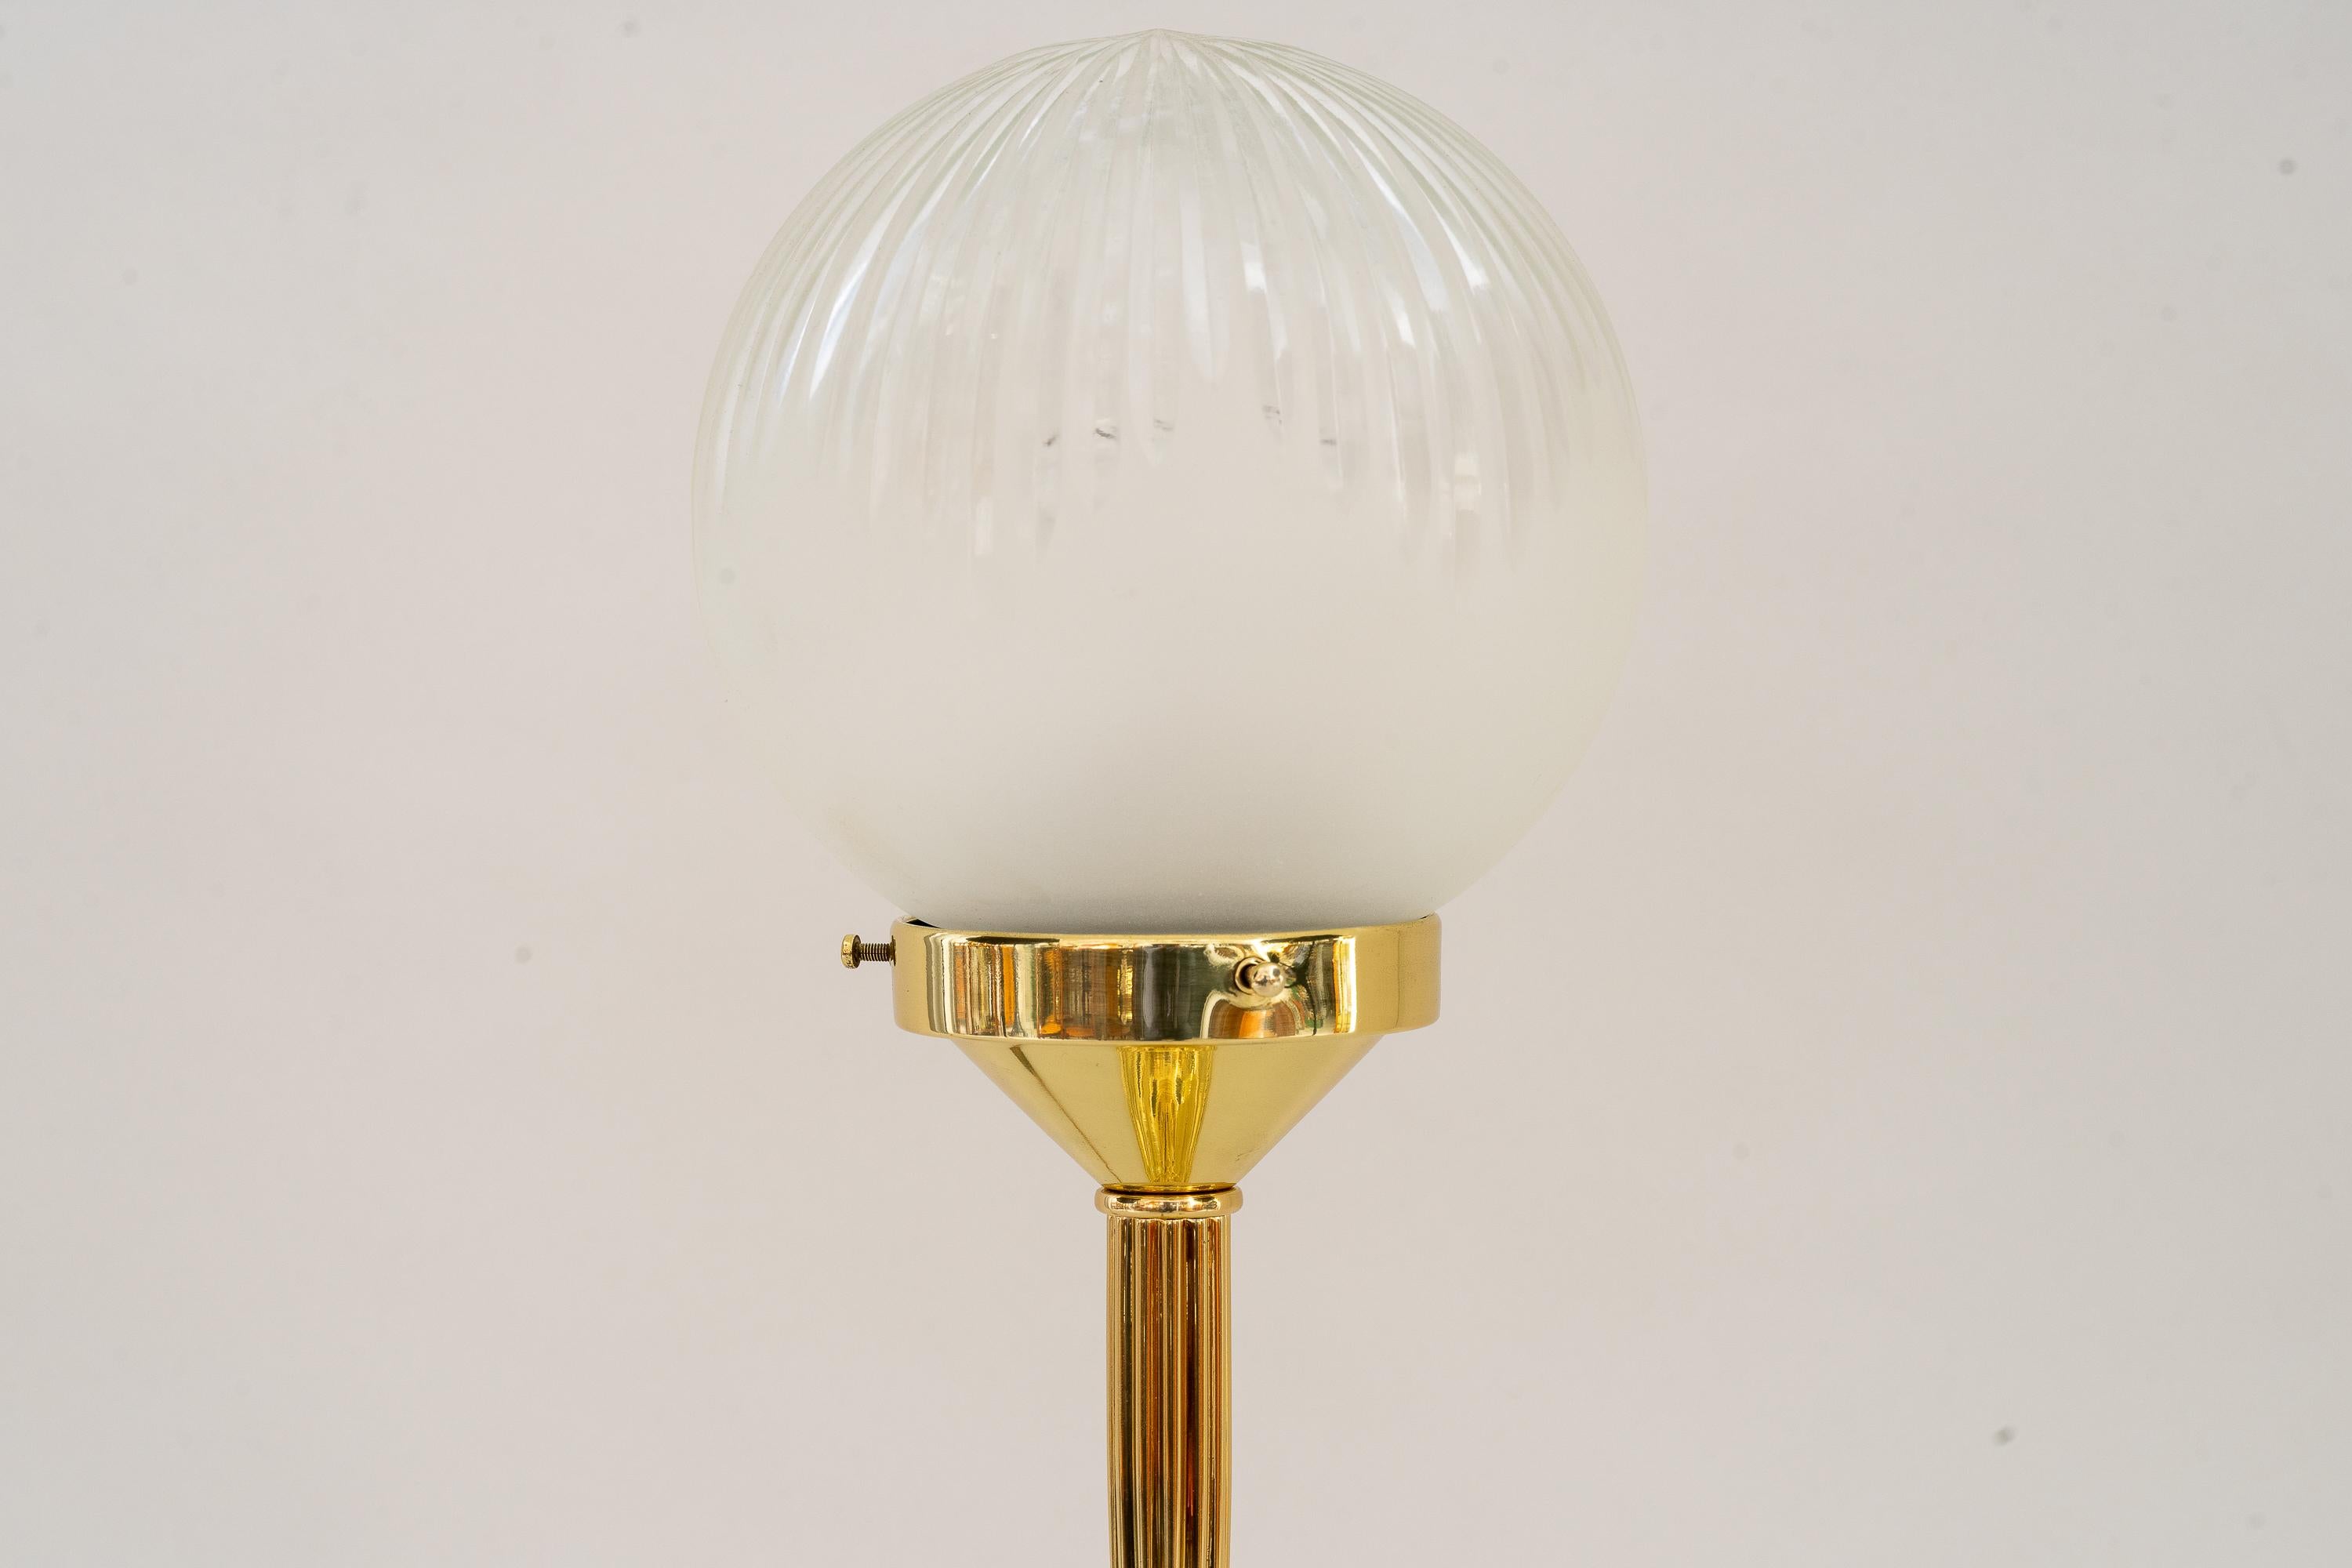 Austrian Art Deco Table Lamp with Original Glass Shade Around 1920s